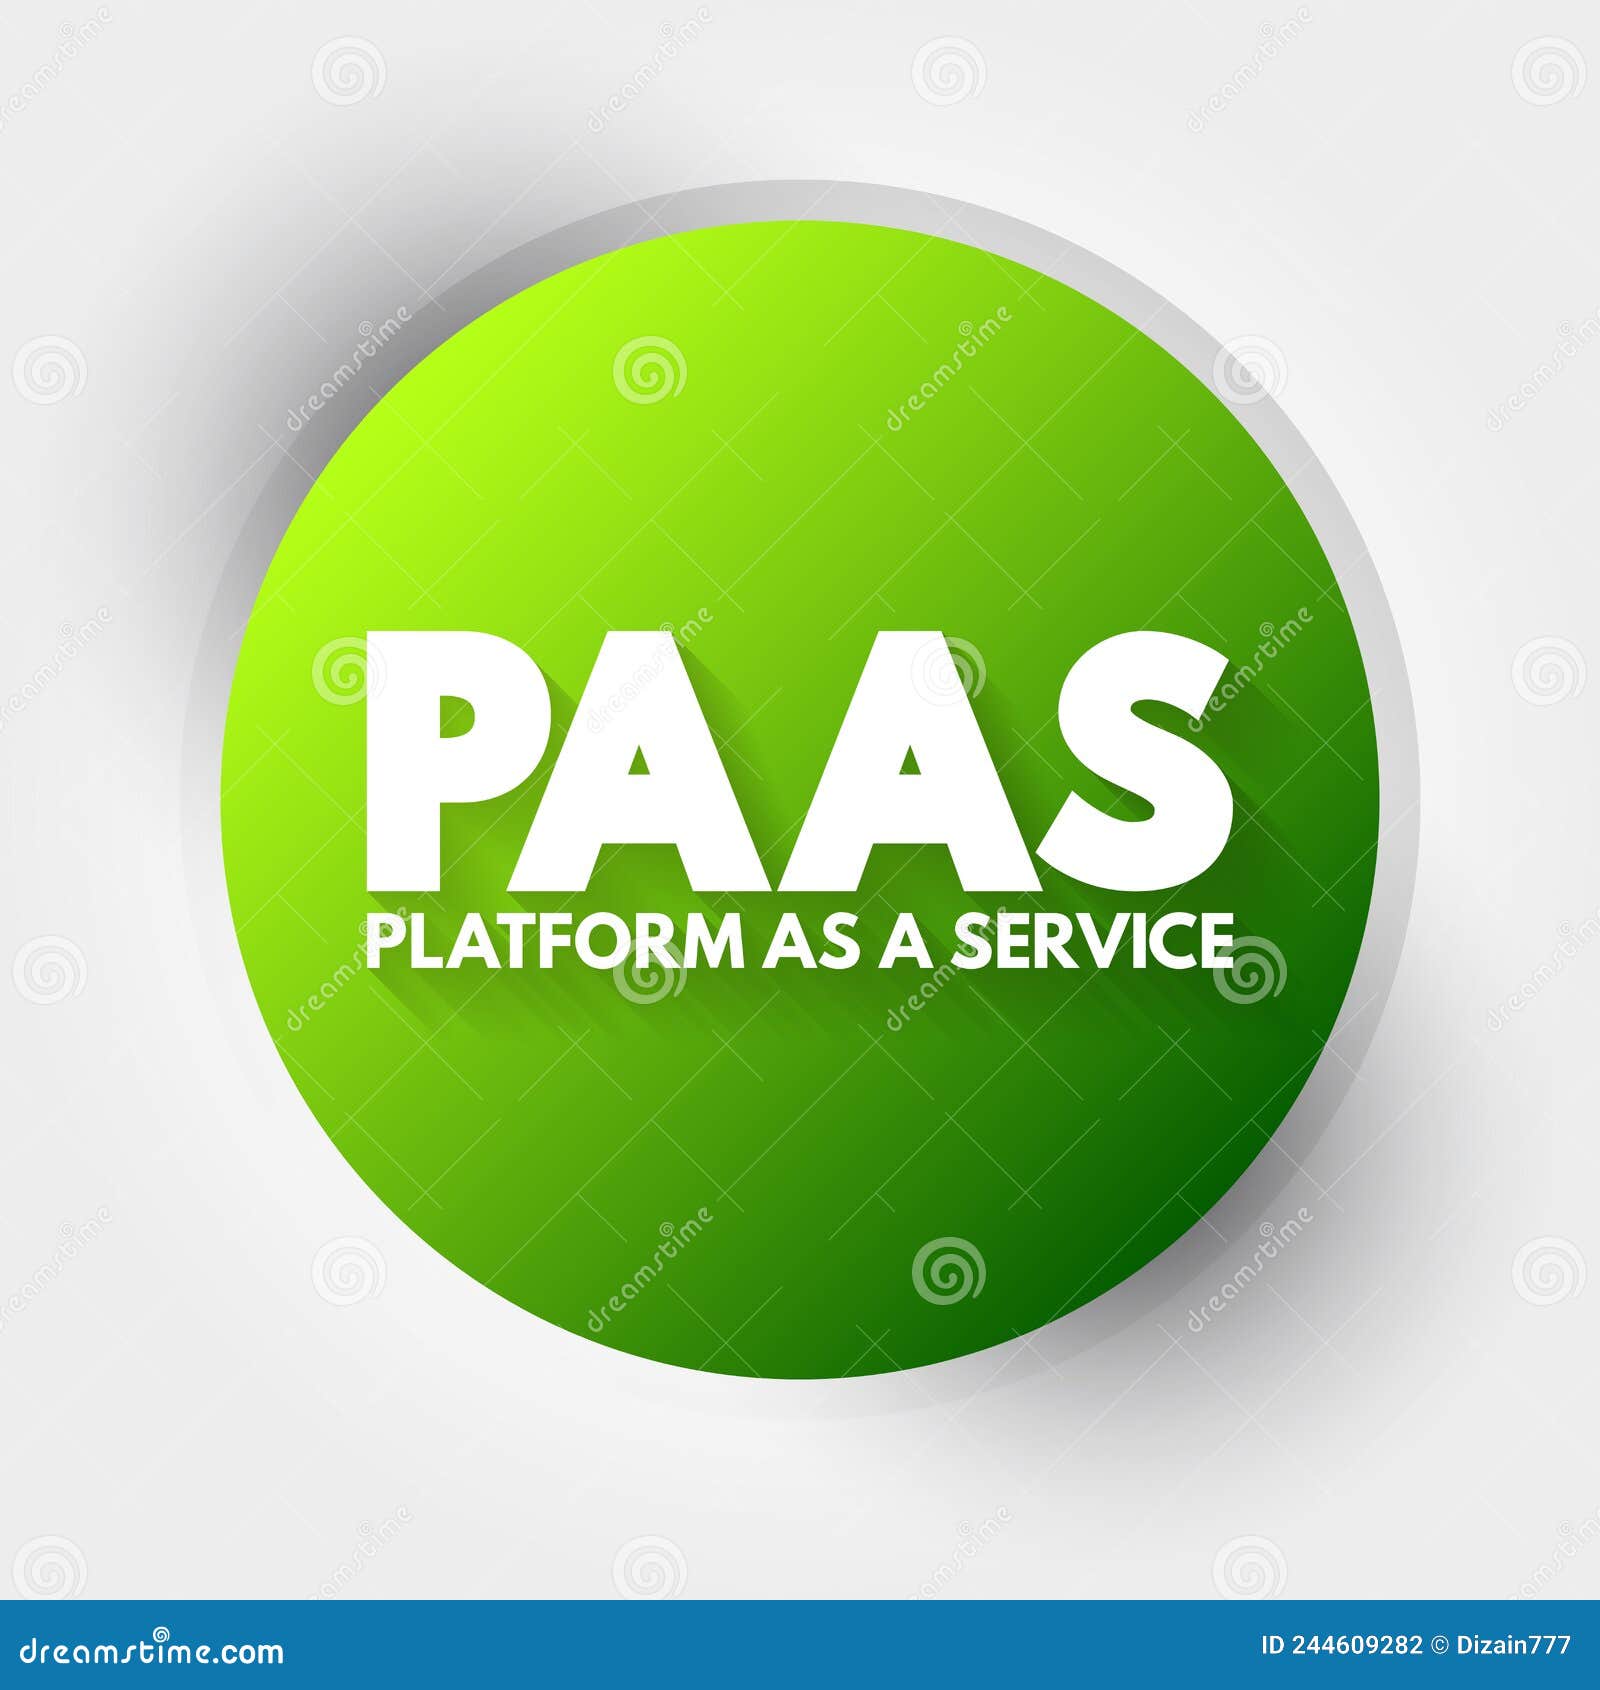 paas - platform as a service acronym, technology concept background